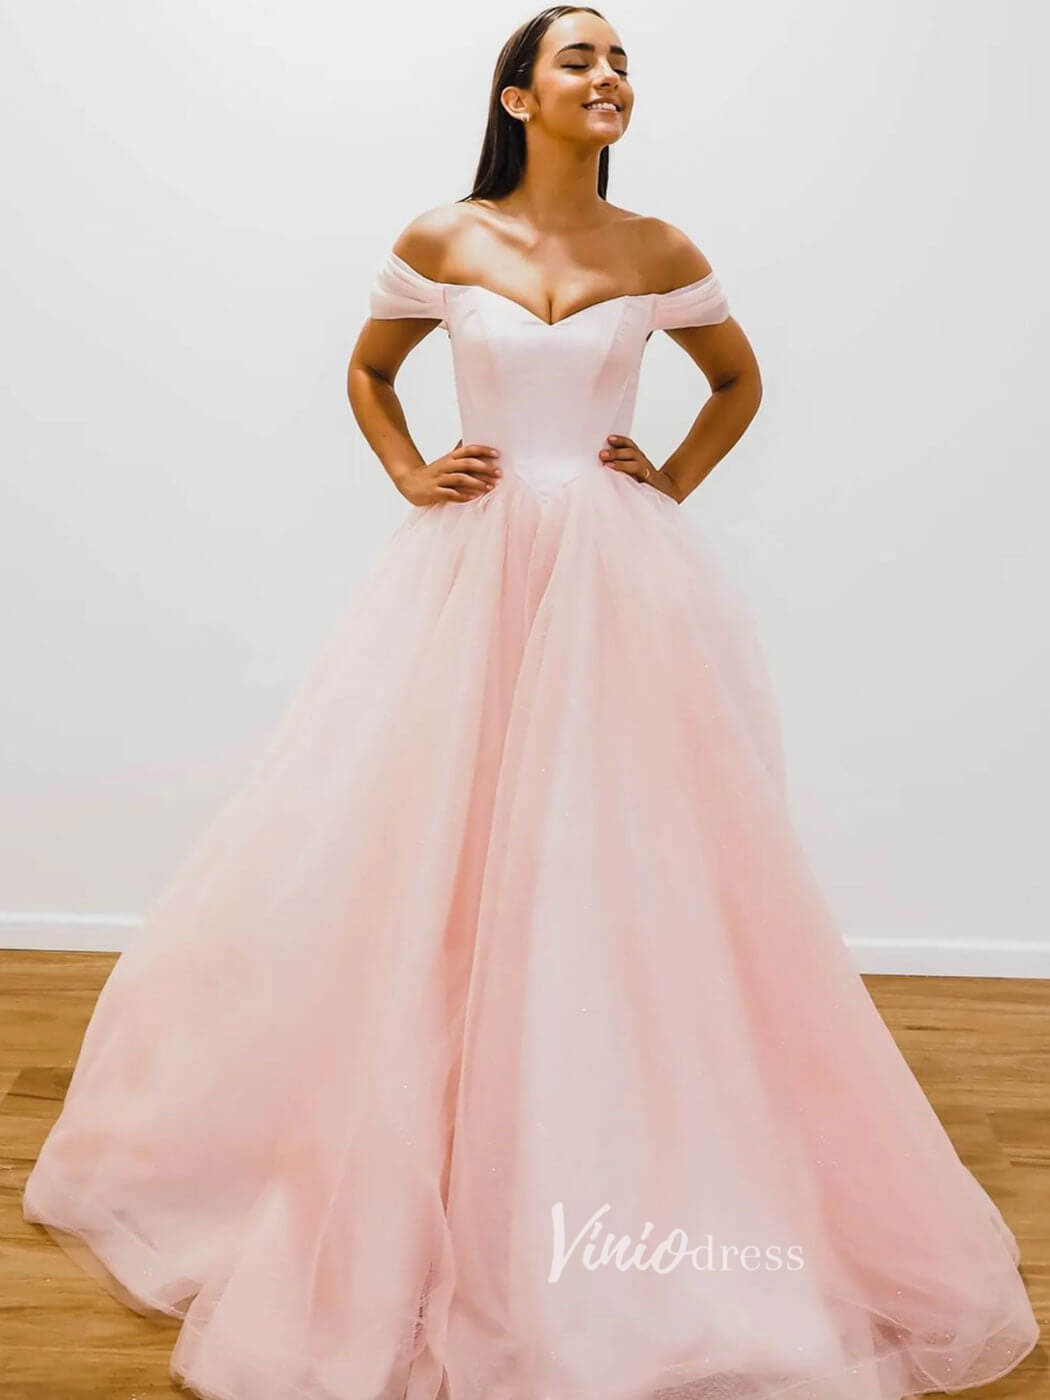 Blush Pink Off the Shoulder Prom Dresses A-Line Tulle Evening Dress FD3093-prom dresses-Viniodress-Blush Pink-Custom Size-Viniodress